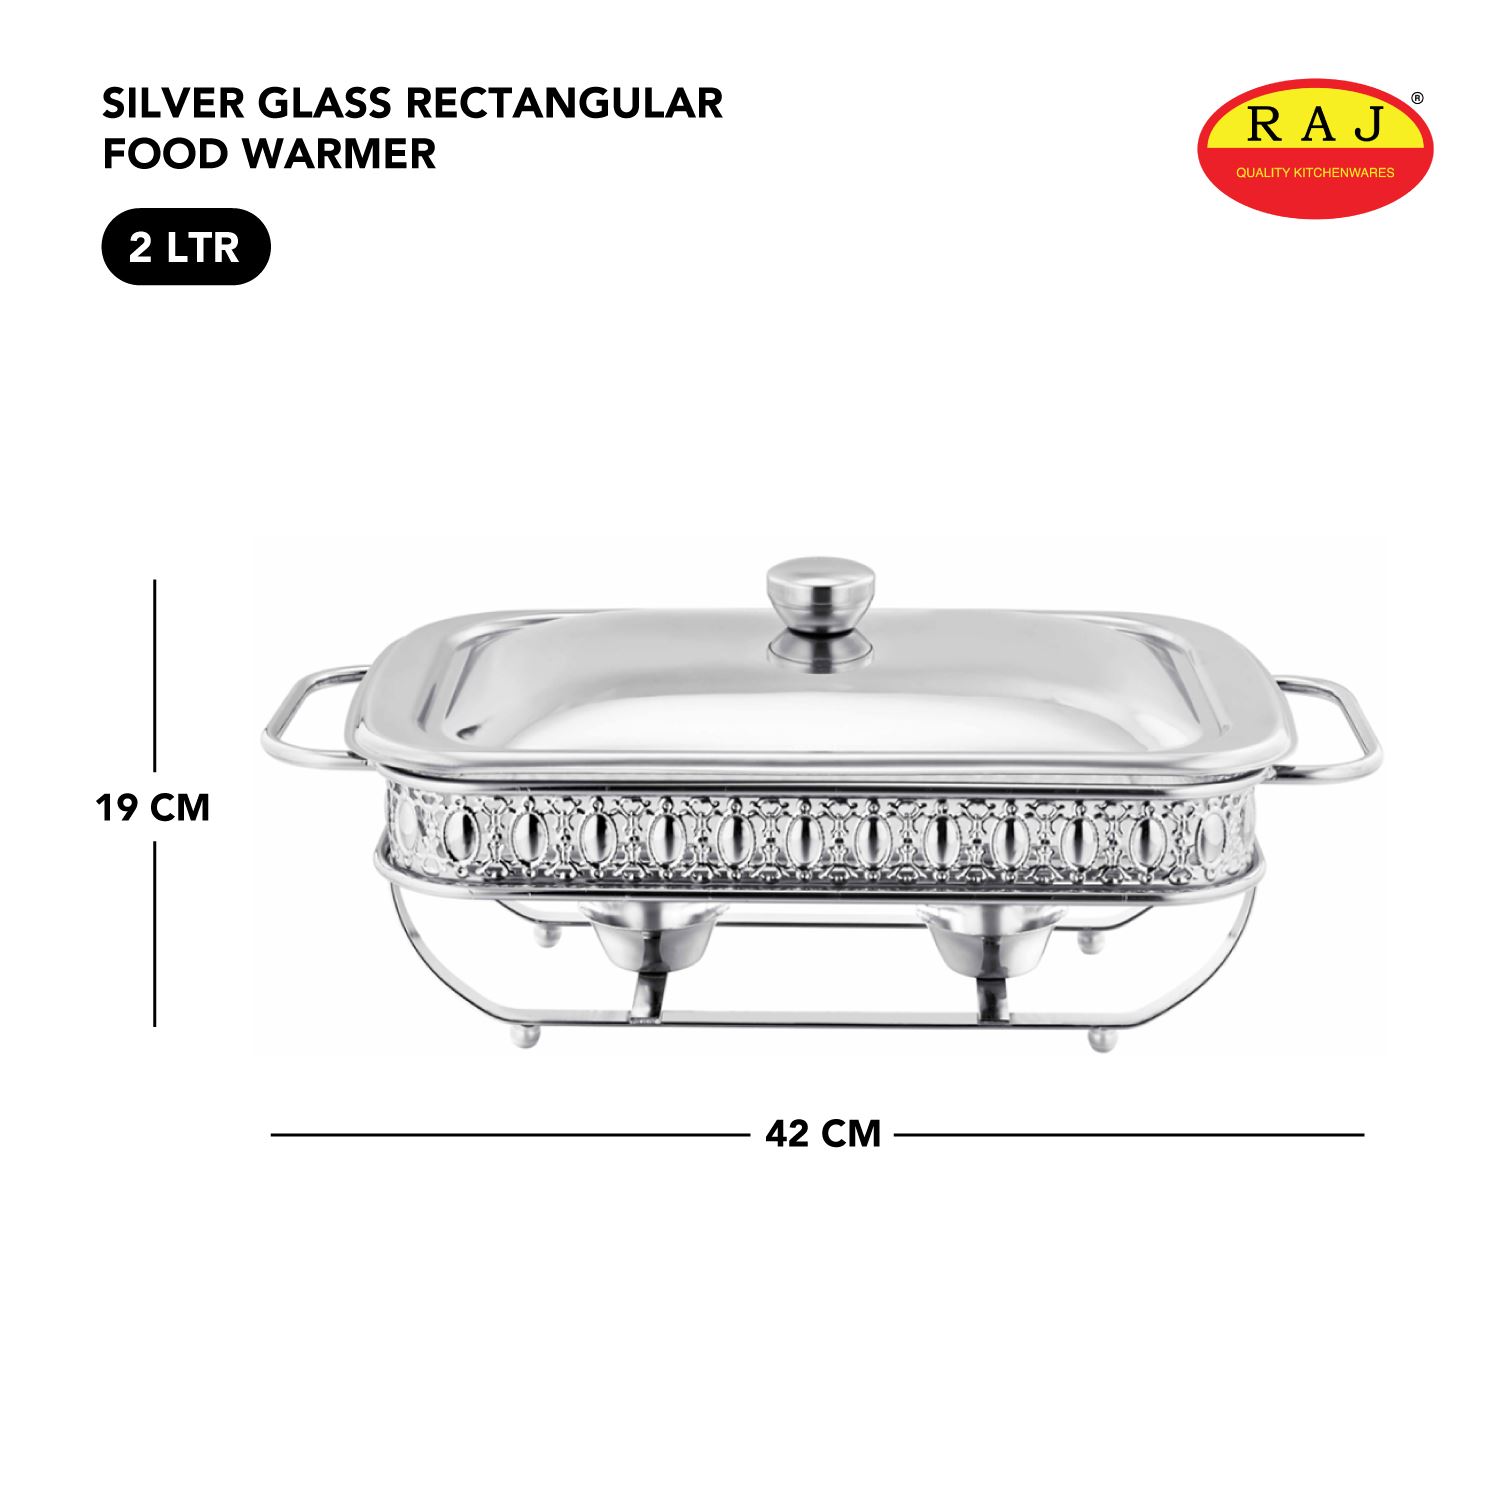 Raj Silver Glass Rectangular Food Warmer 2.0 LTR